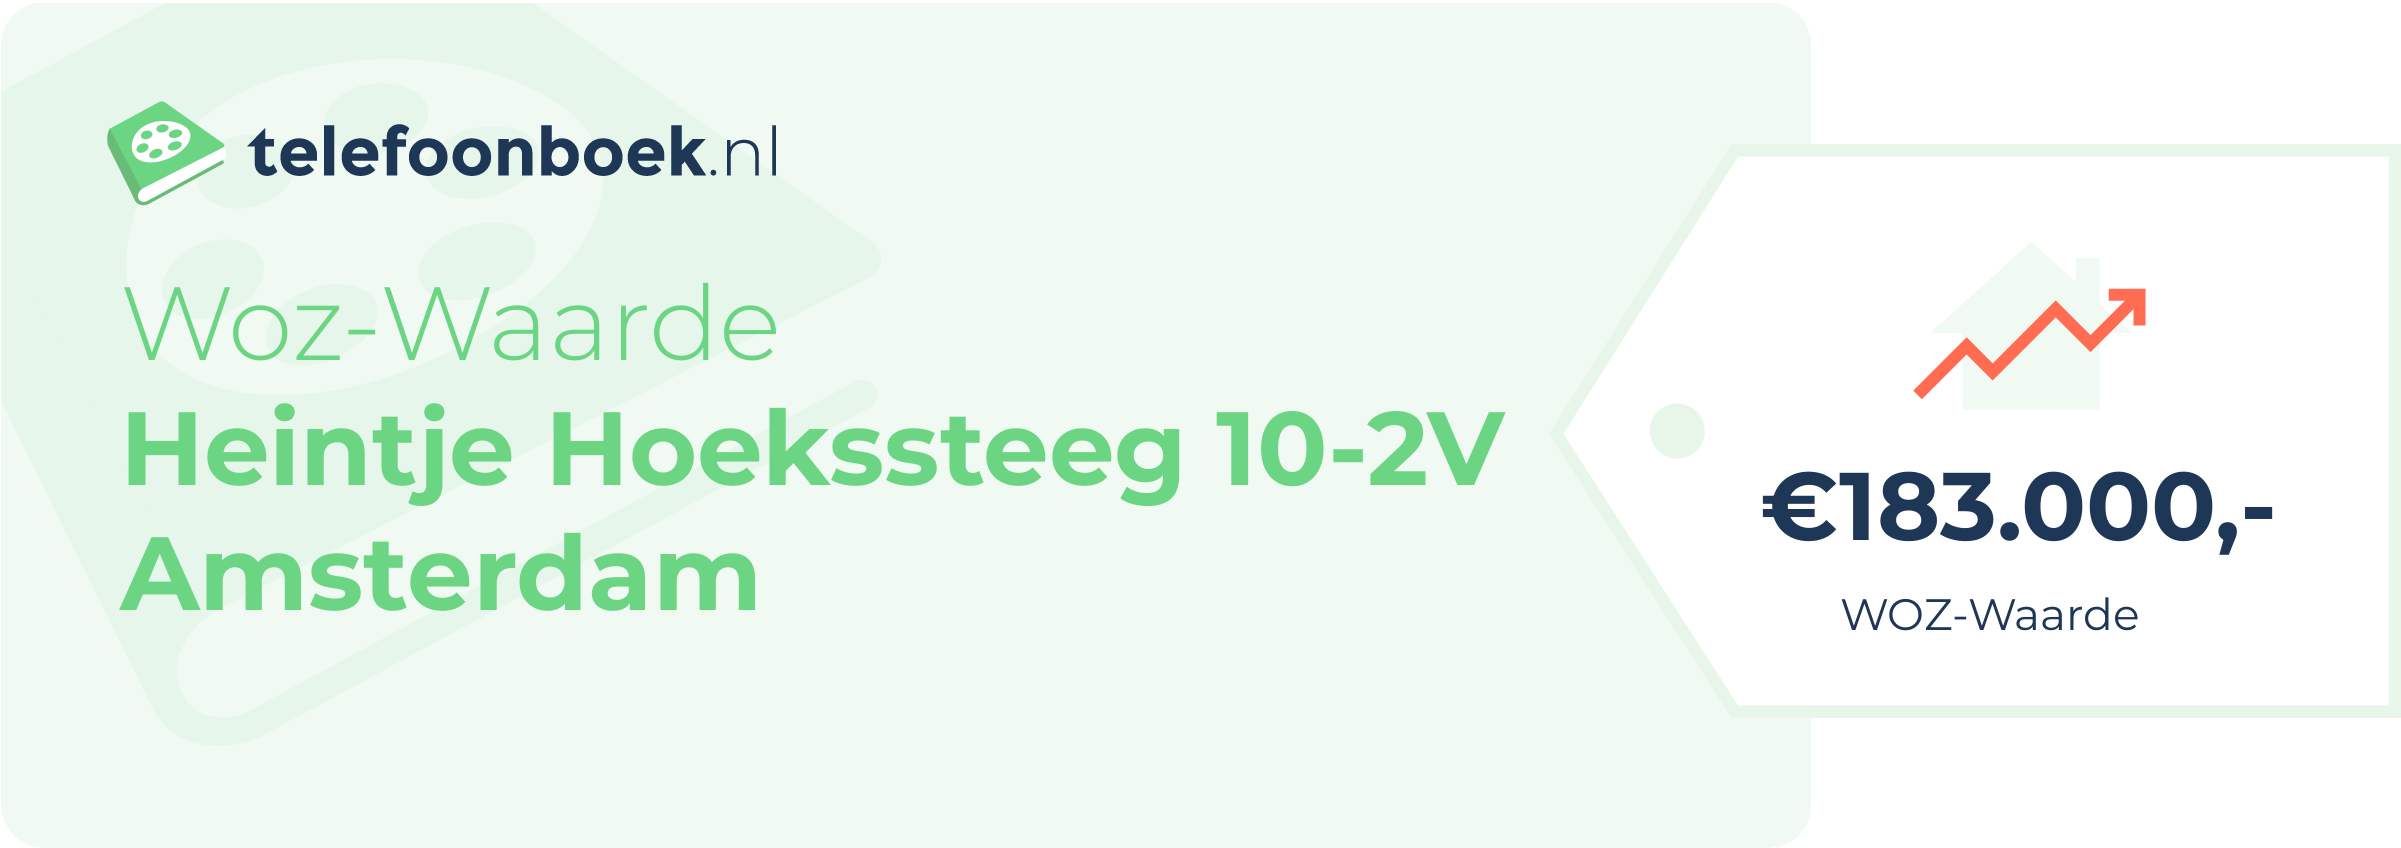 WOZ-waarde Heintje Hoekssteeg 10-2V Amsterdam